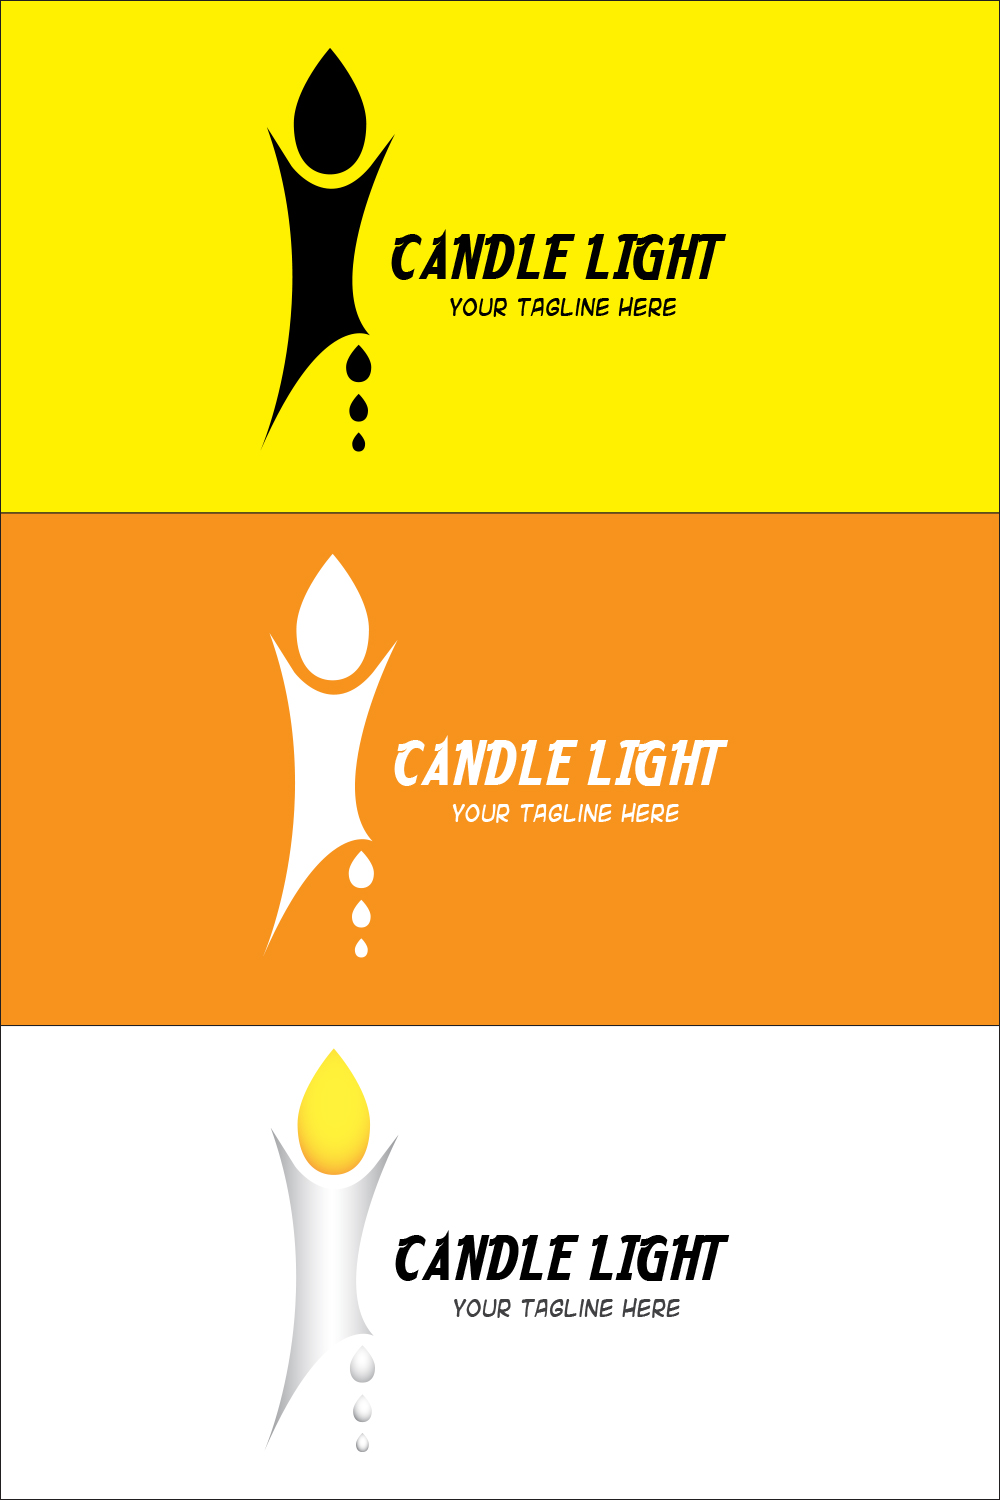 Candle Light Logo Pinterest Collage image.